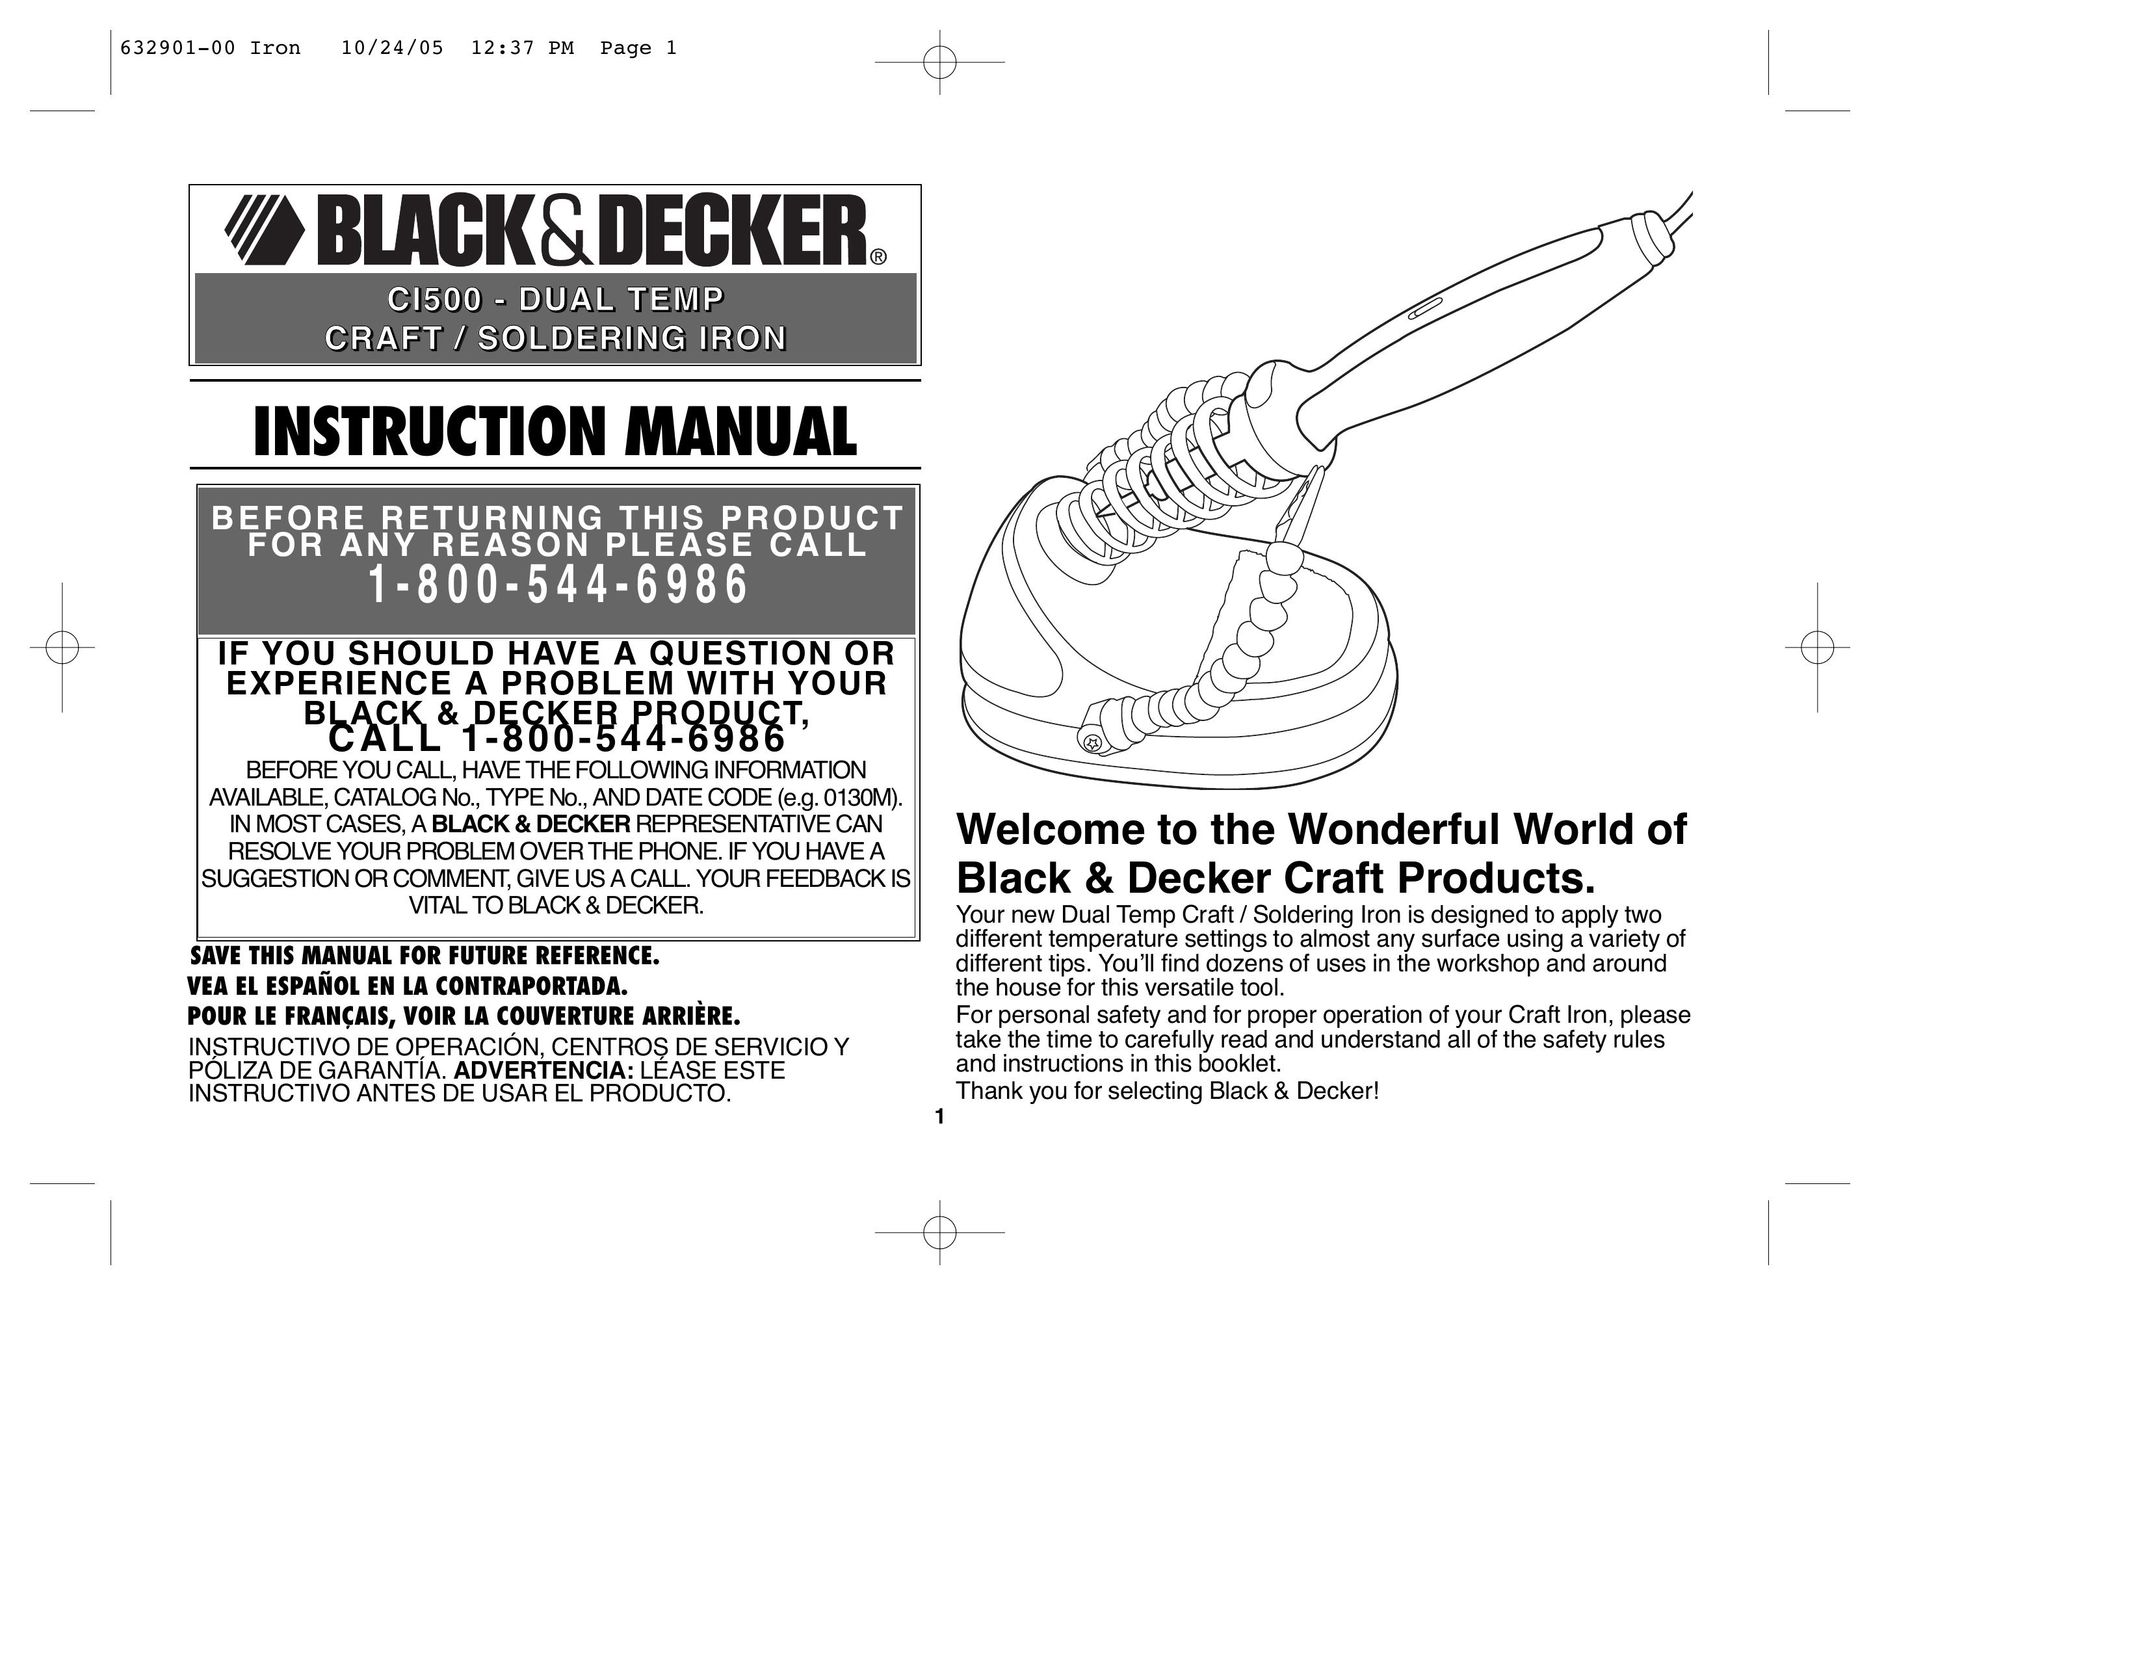 Black & Decker 632901-00 Soldering Gun User Manual